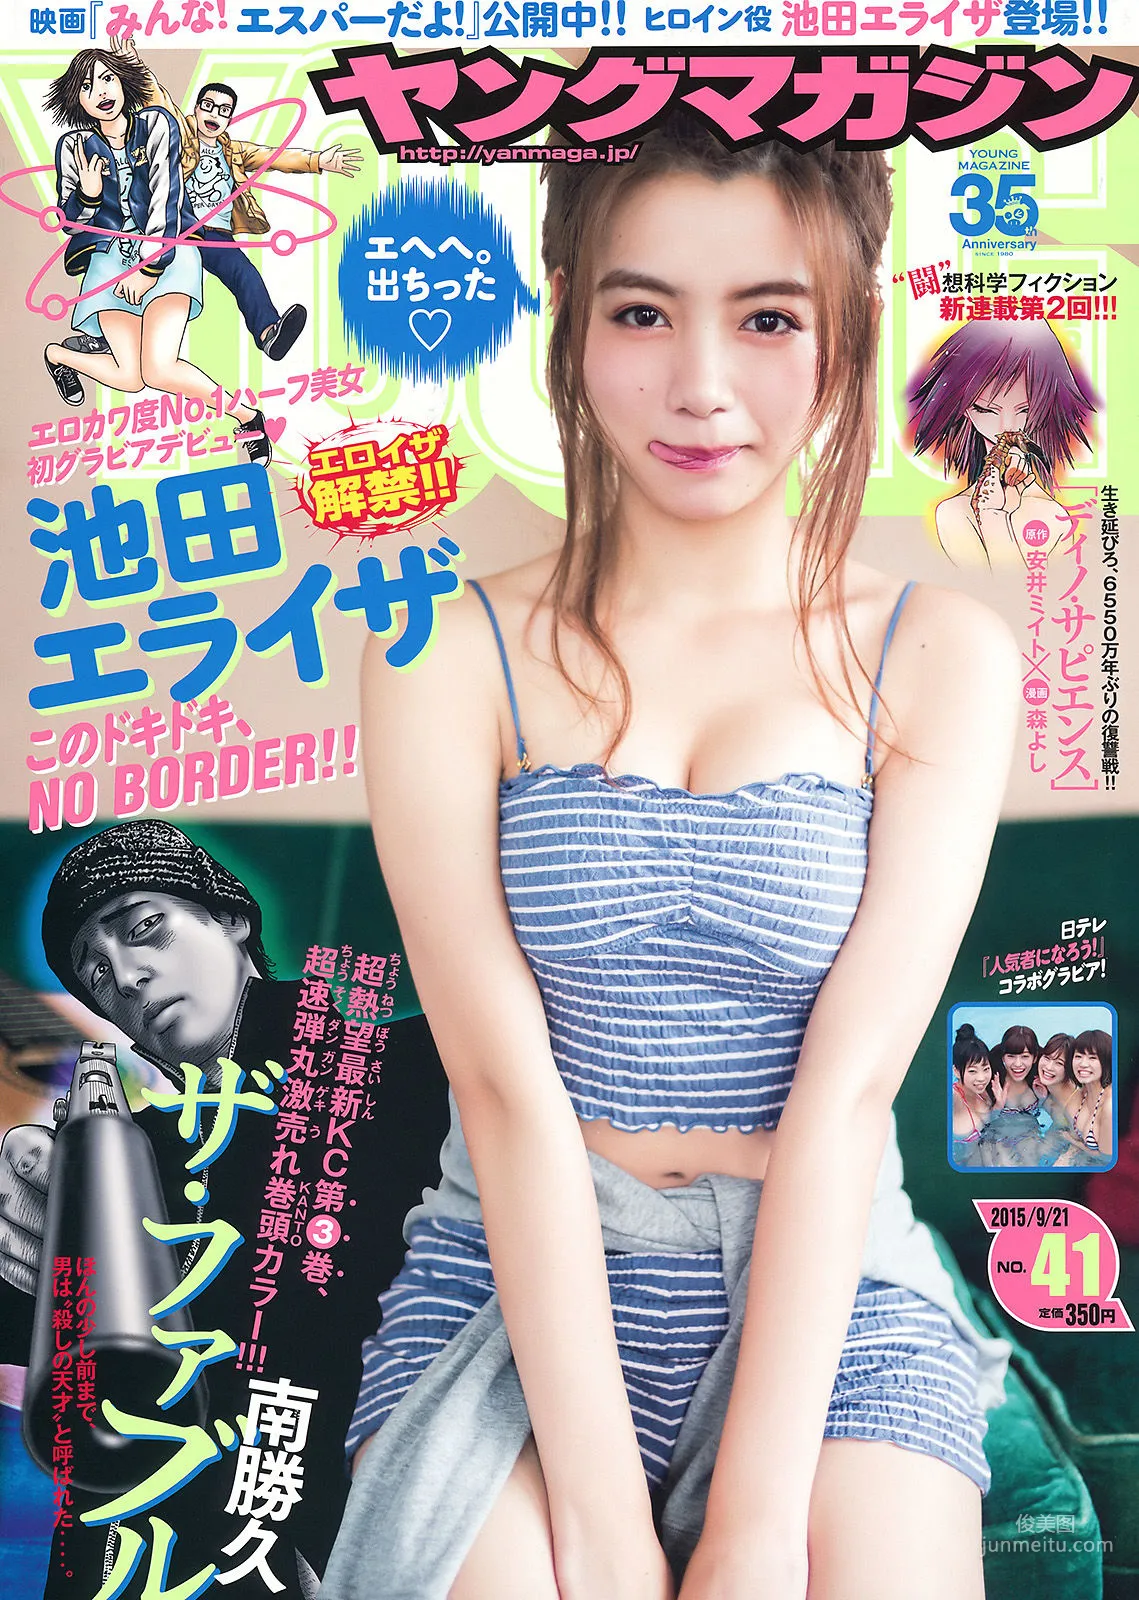 [Young Magazine] 池田エライザ 他 2015年No.41 写真杂志1